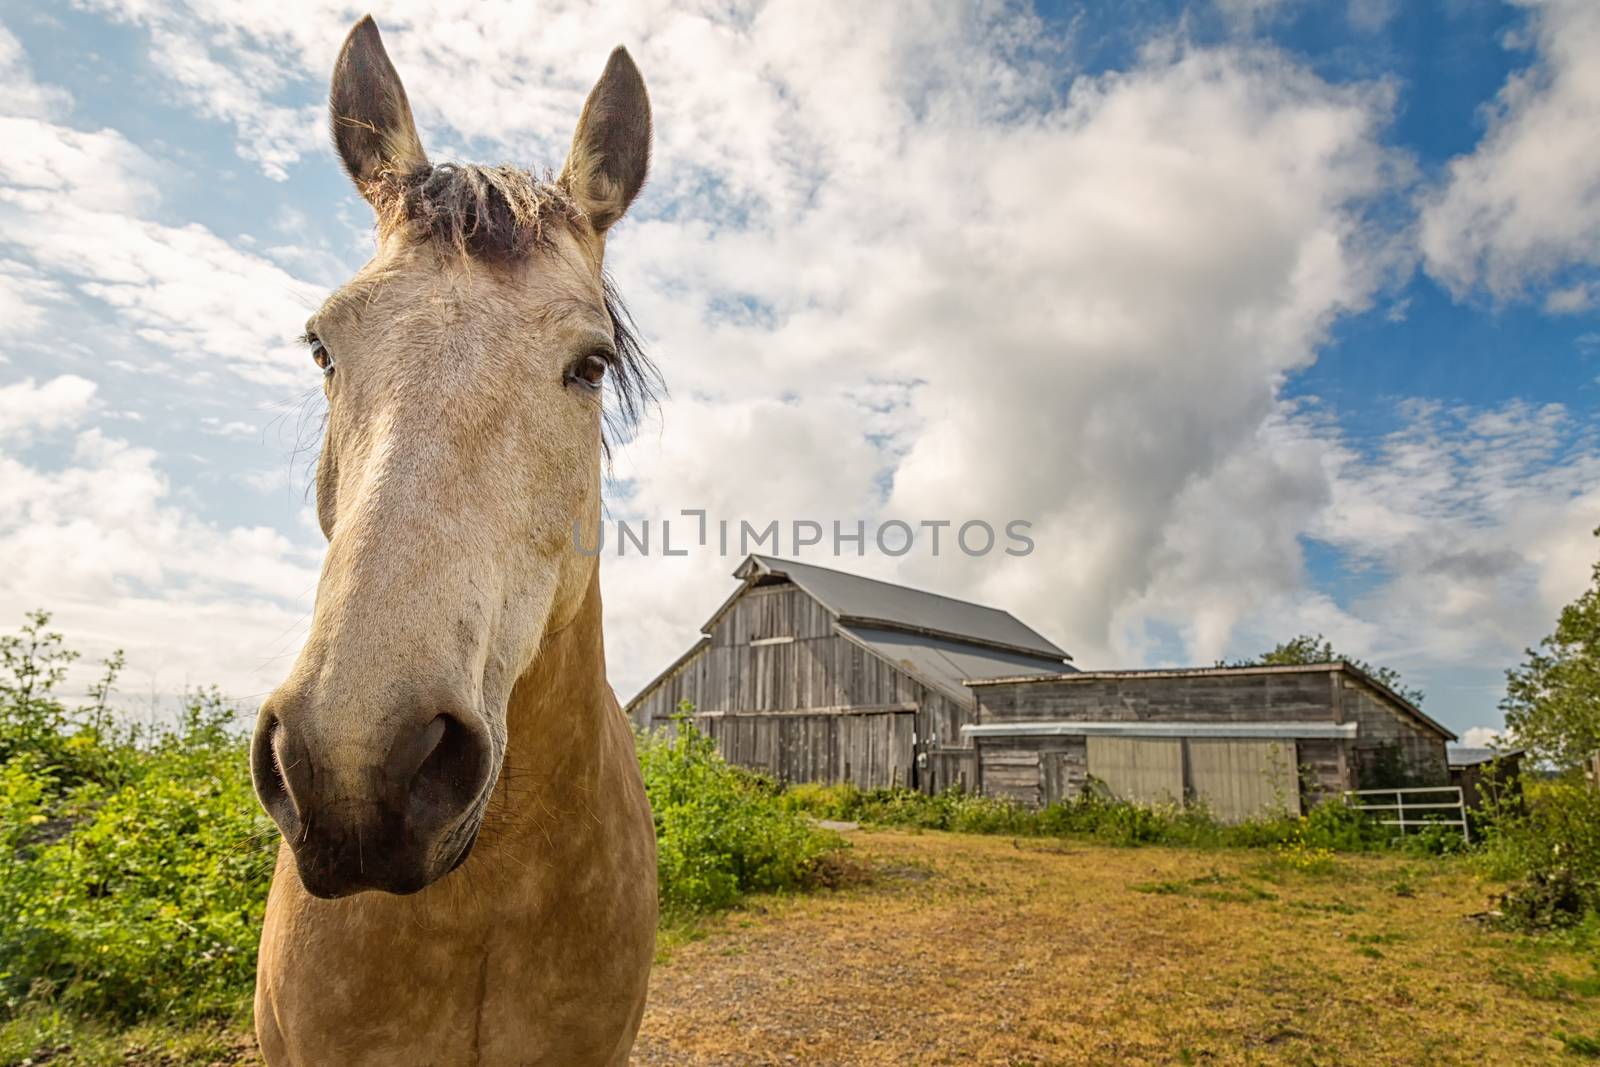 Friendly Horse at His Barn, Color Image